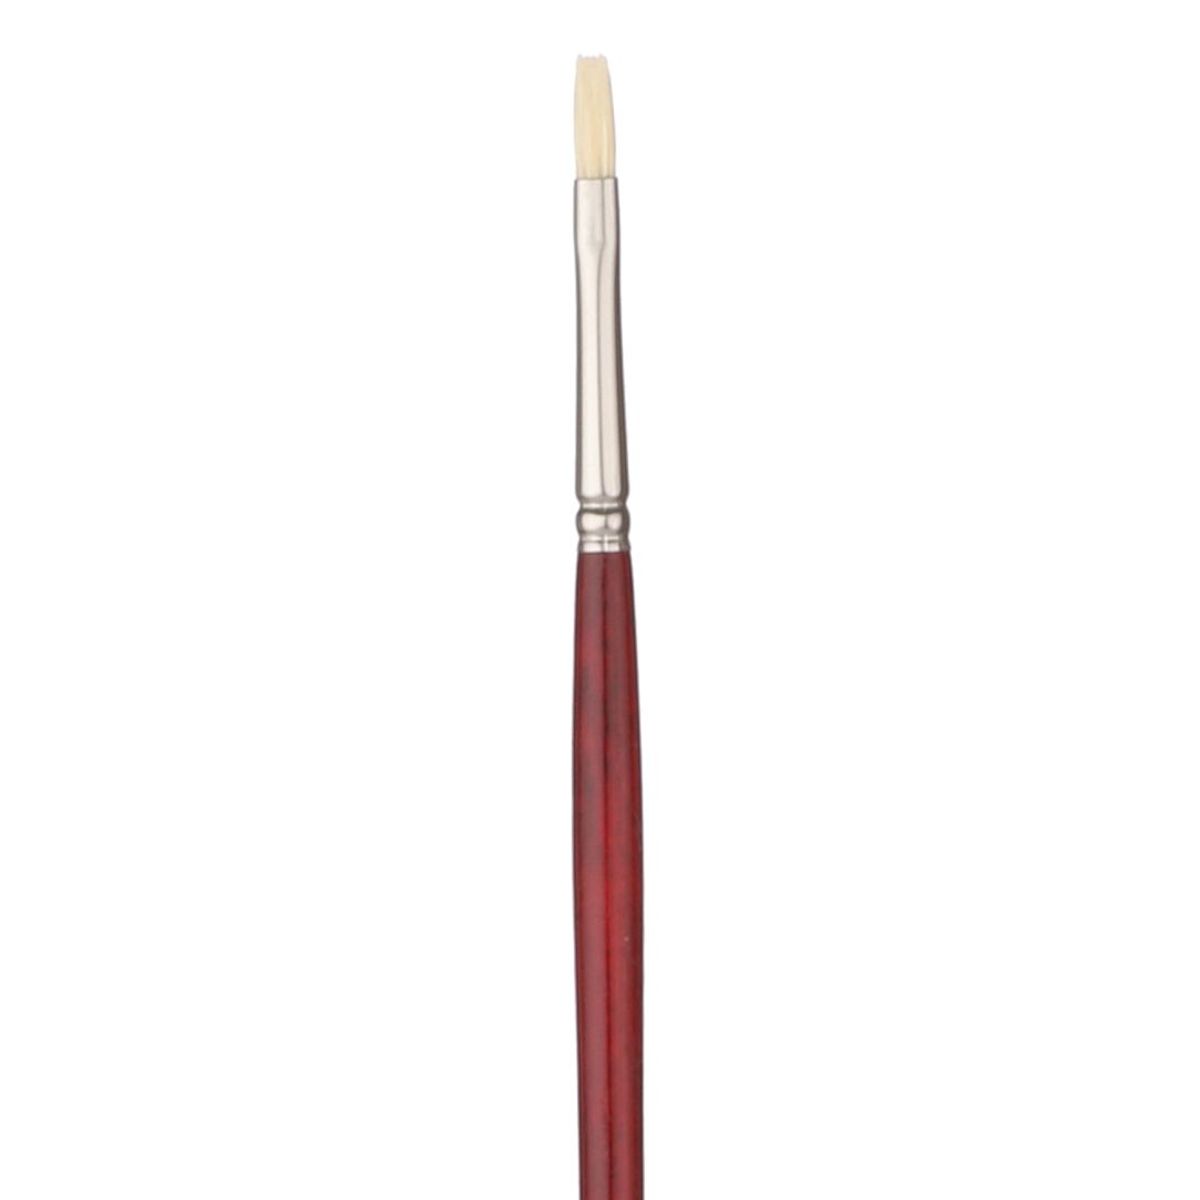 Art essentials supremo white hog bristle brush - series 140f - flat - long handle - size: 0